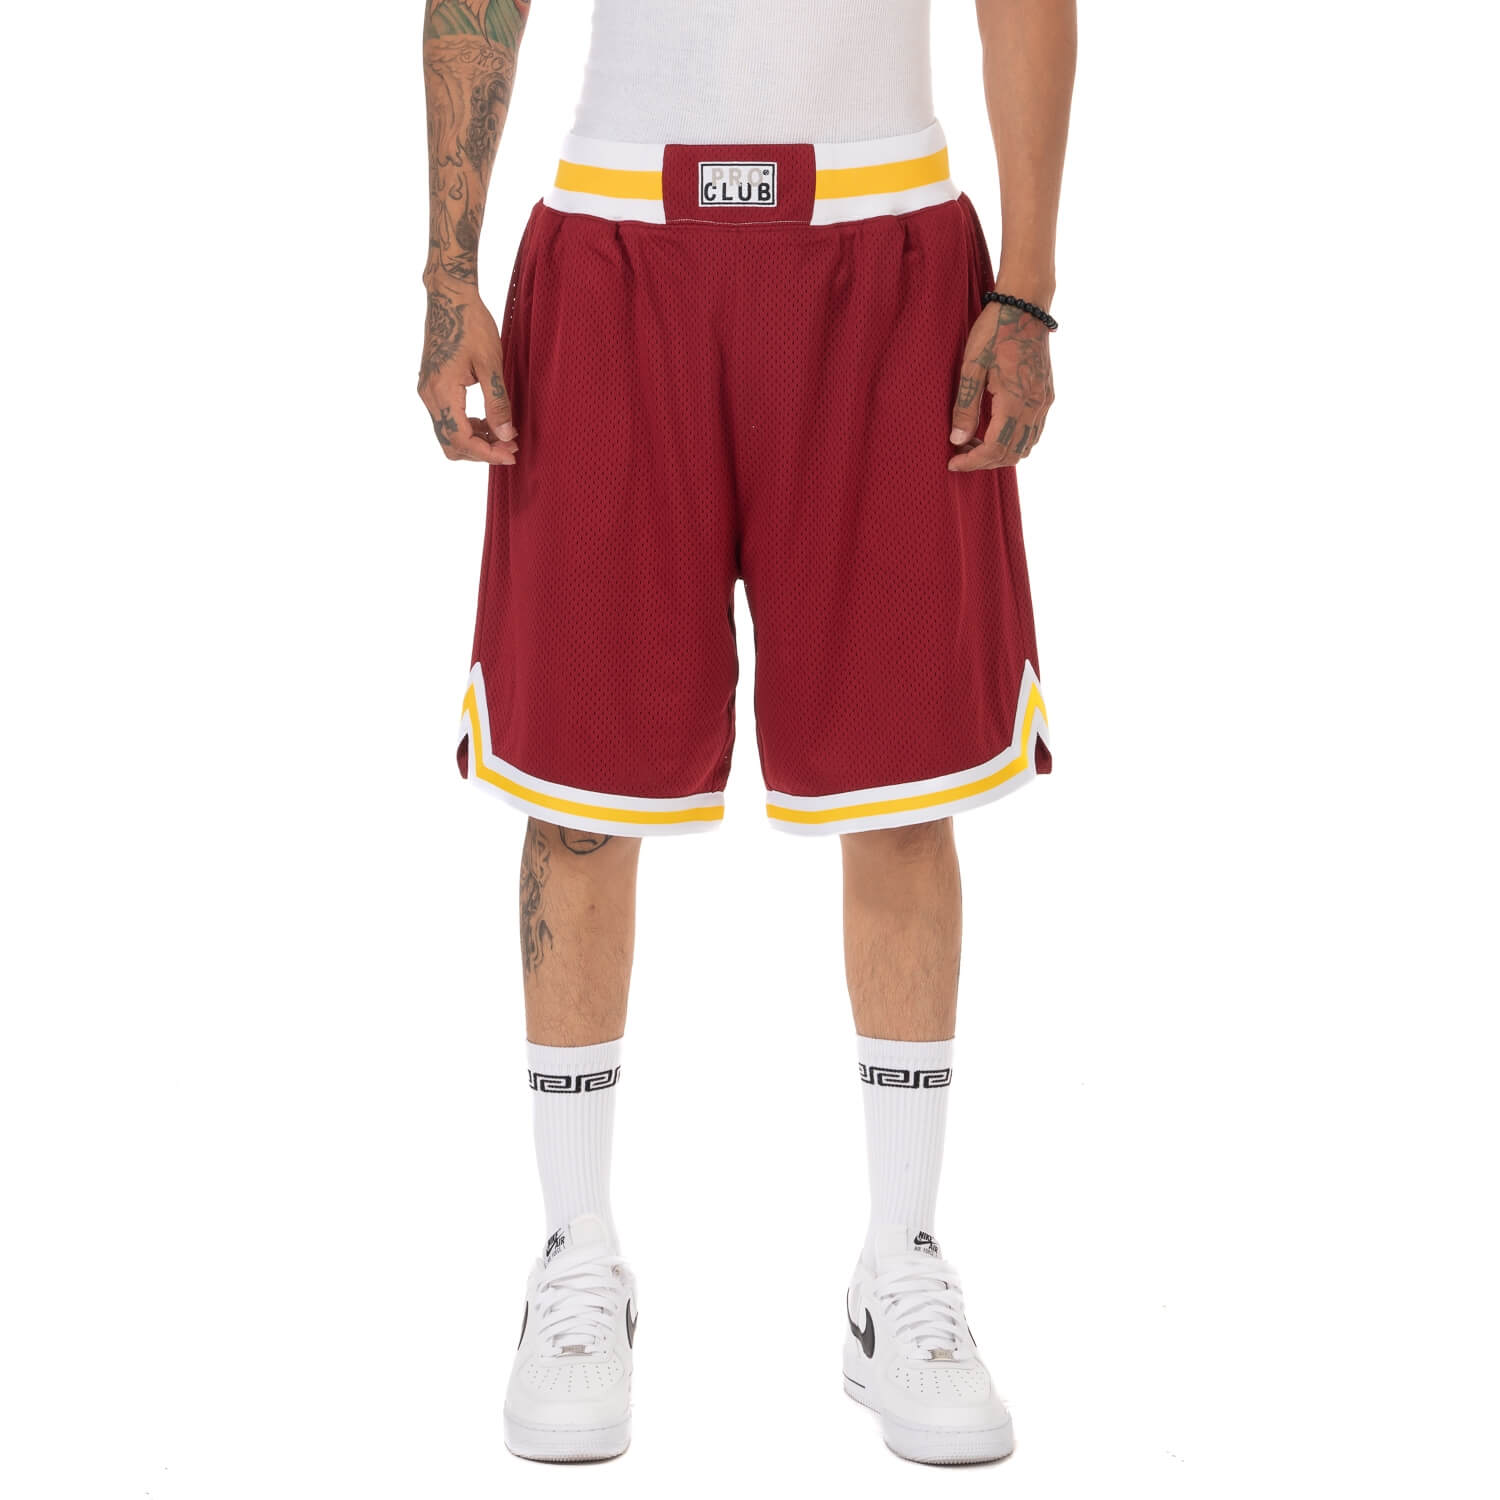 Pro Club Classic Basketball Shorts - Maroon